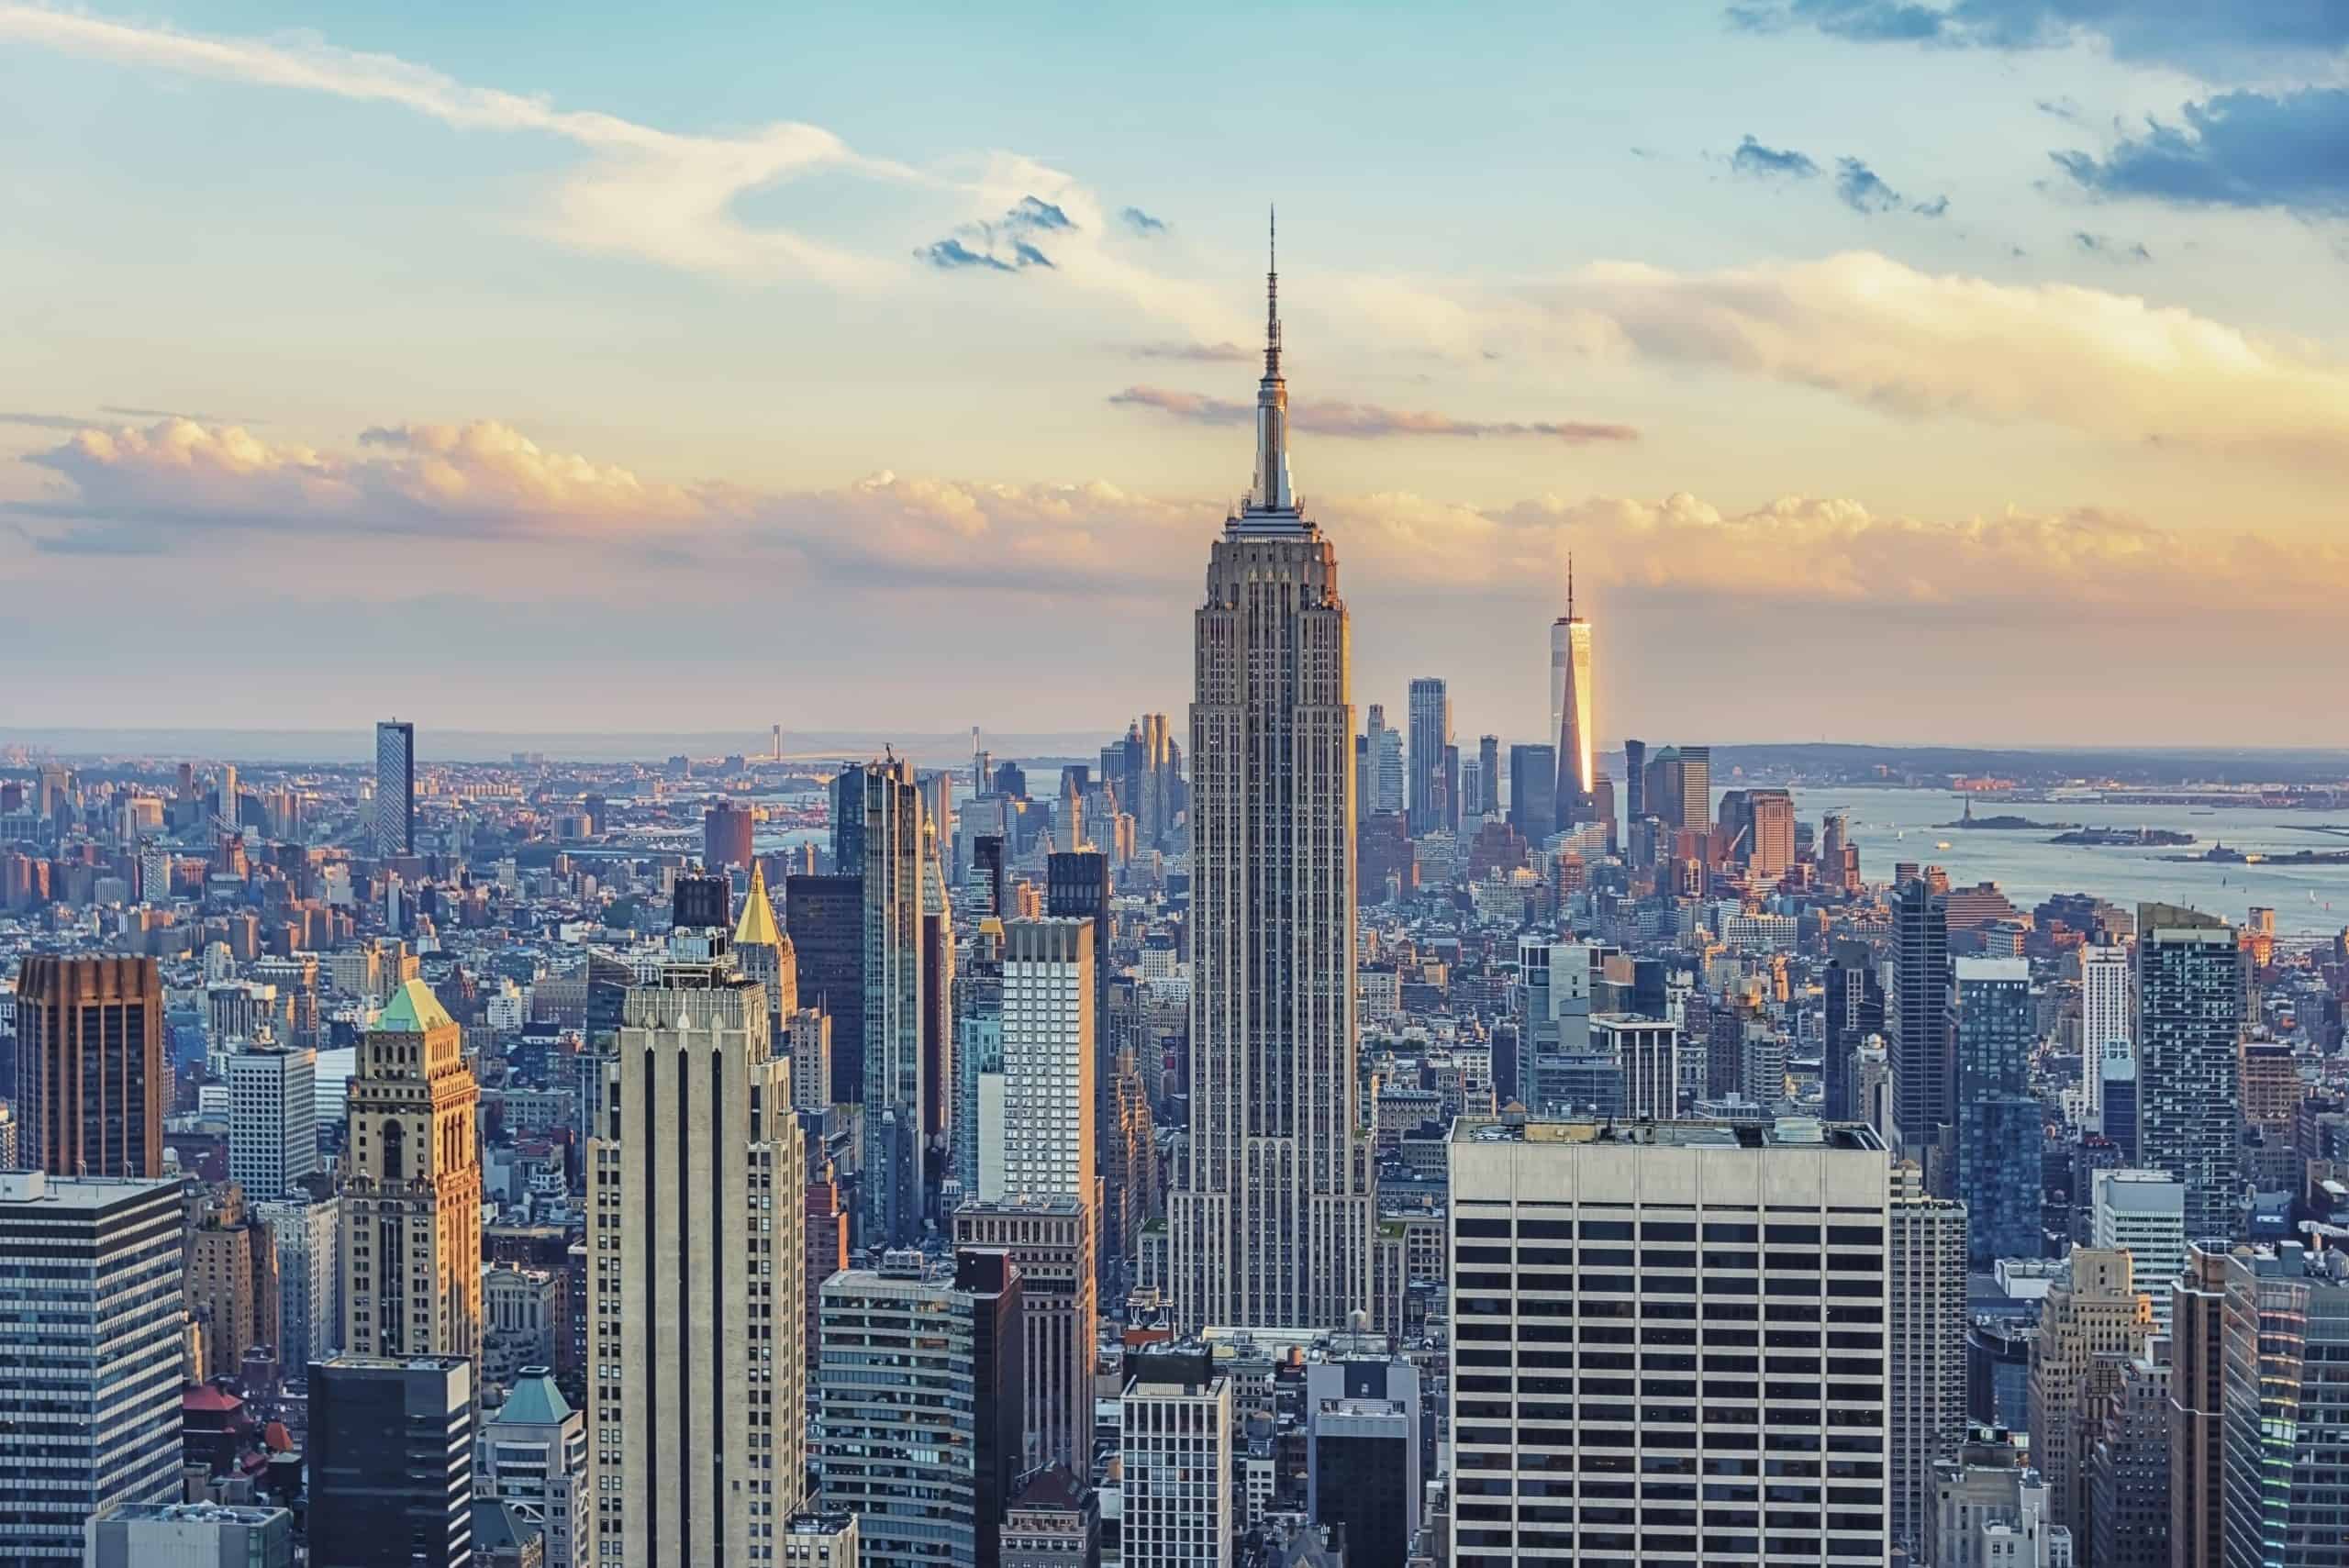 New York | The skyline of New York City, United States